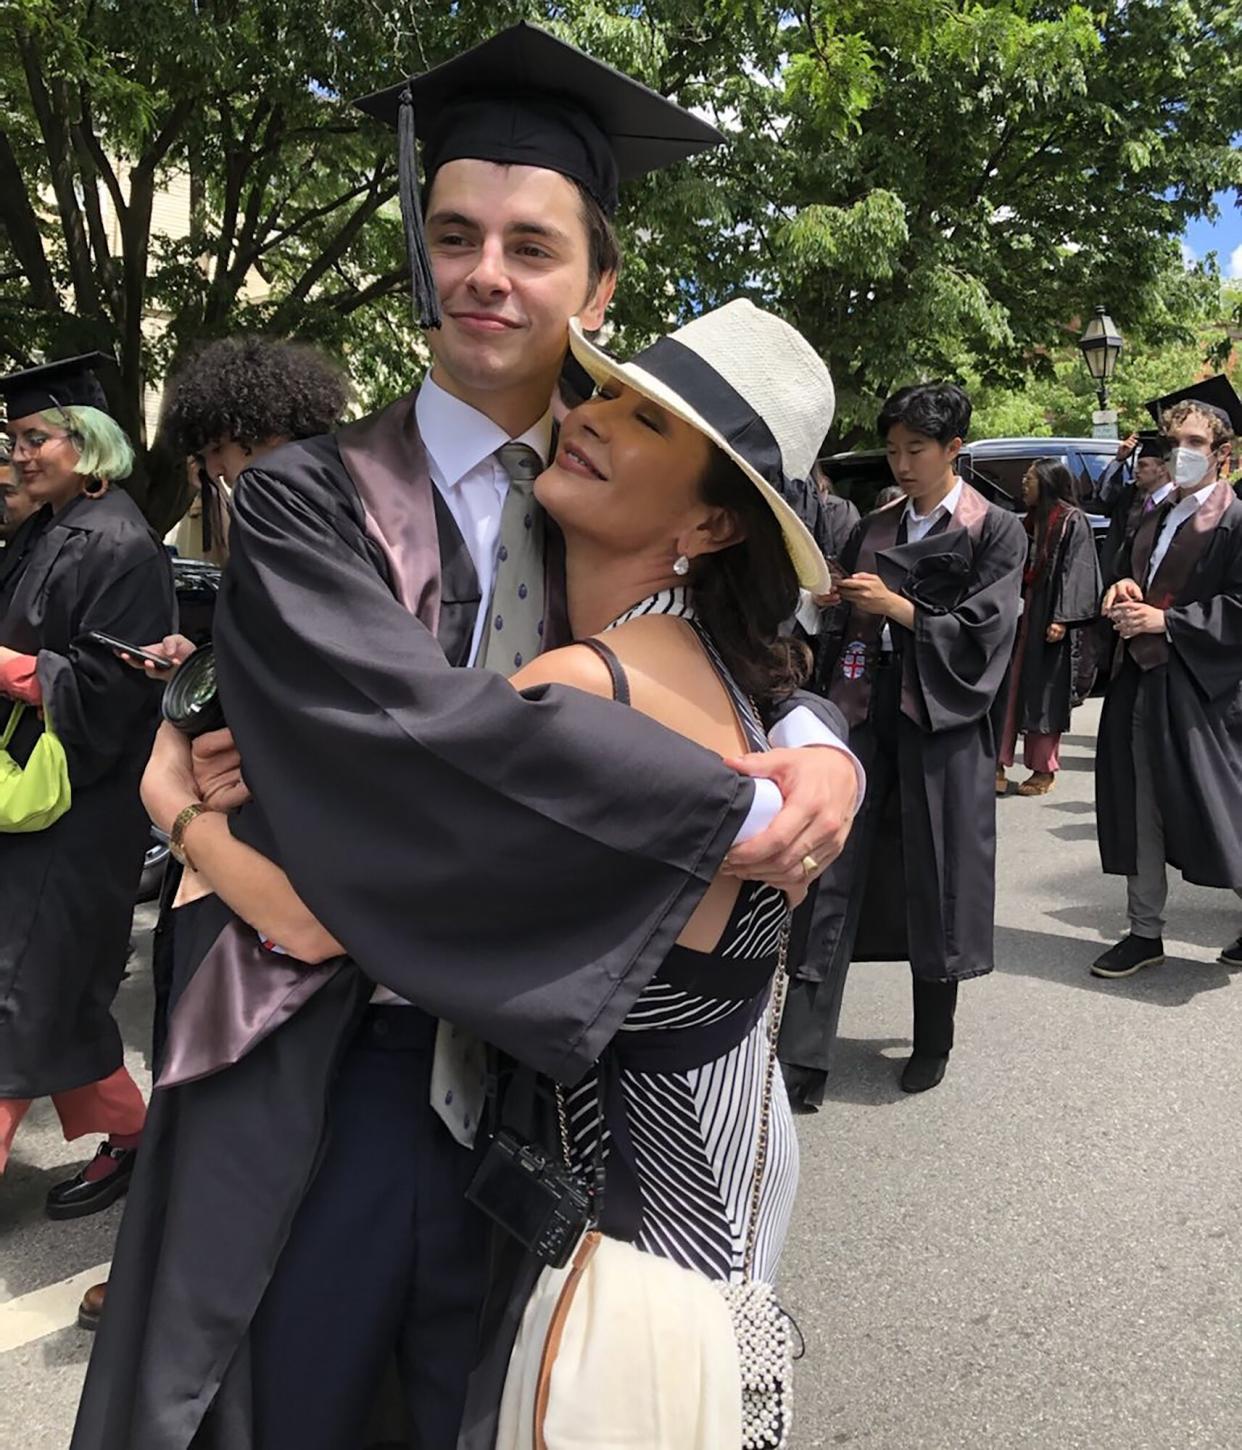 Catherine Zeta-Jones and Michael Douglas' Son Graduates High School: 'Inexplicably Proud'. https://www.instagram.com/p/CeJ6_sKv5Dp/.